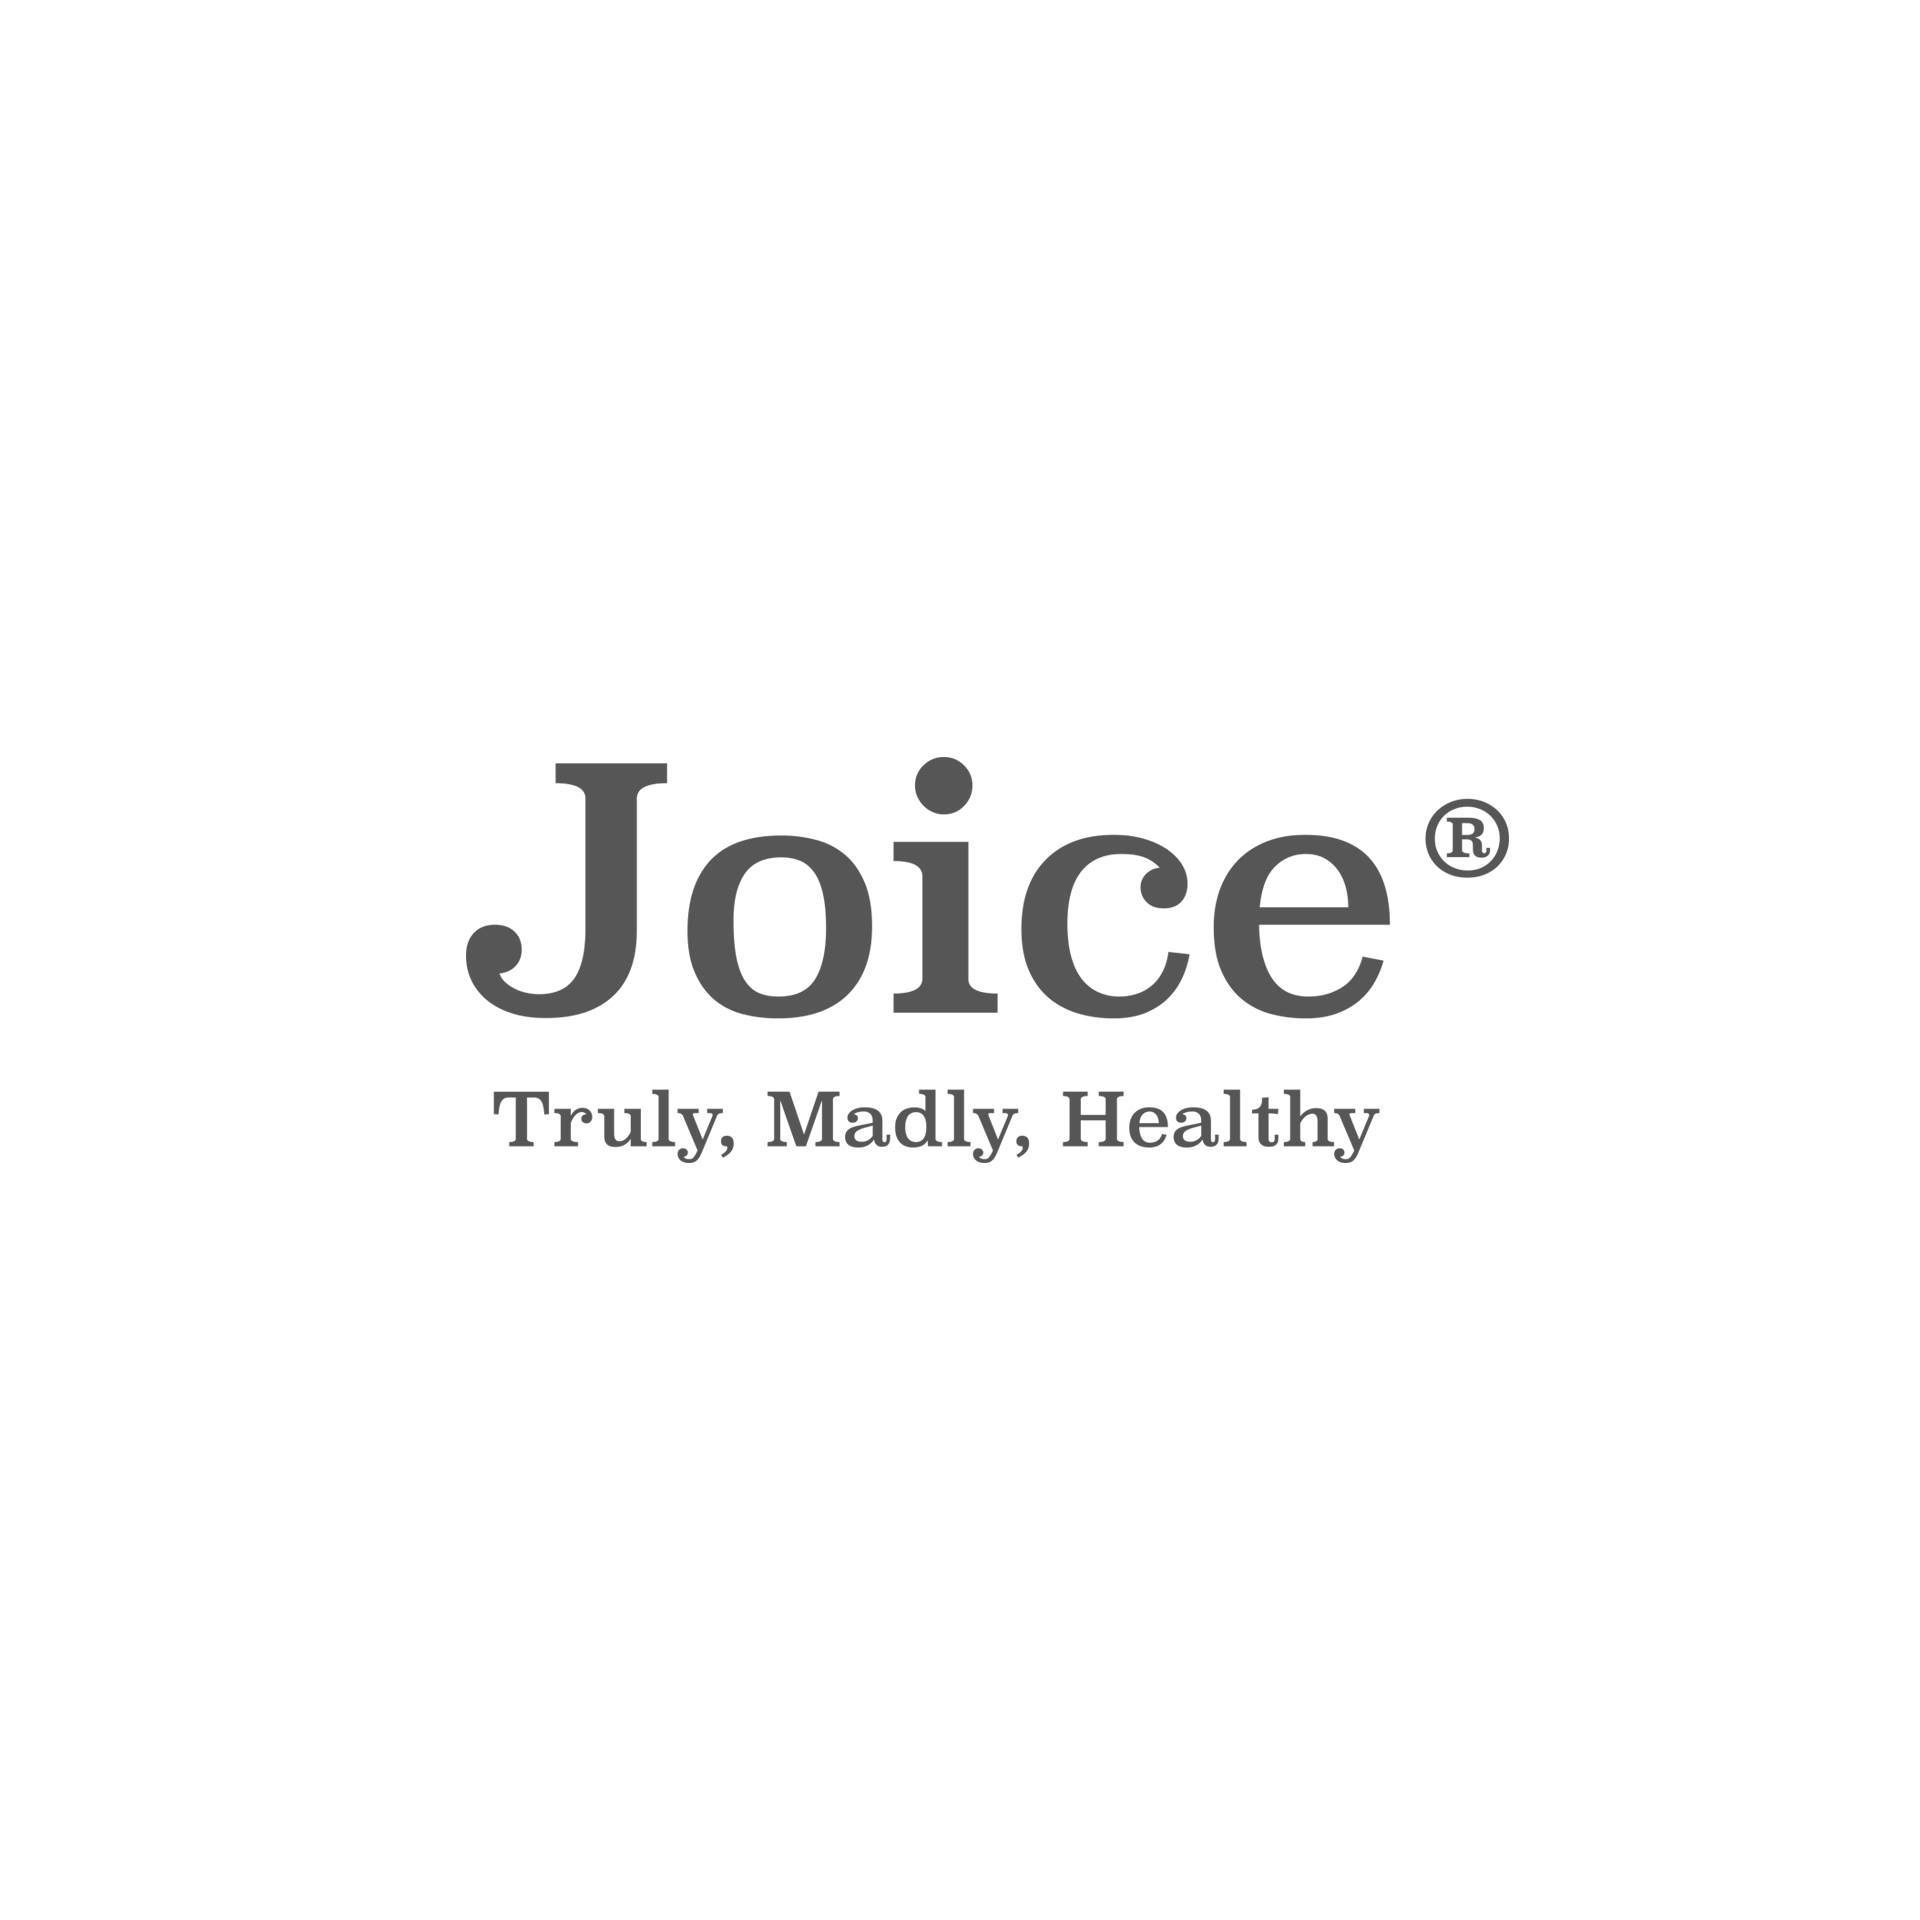 Joice logo